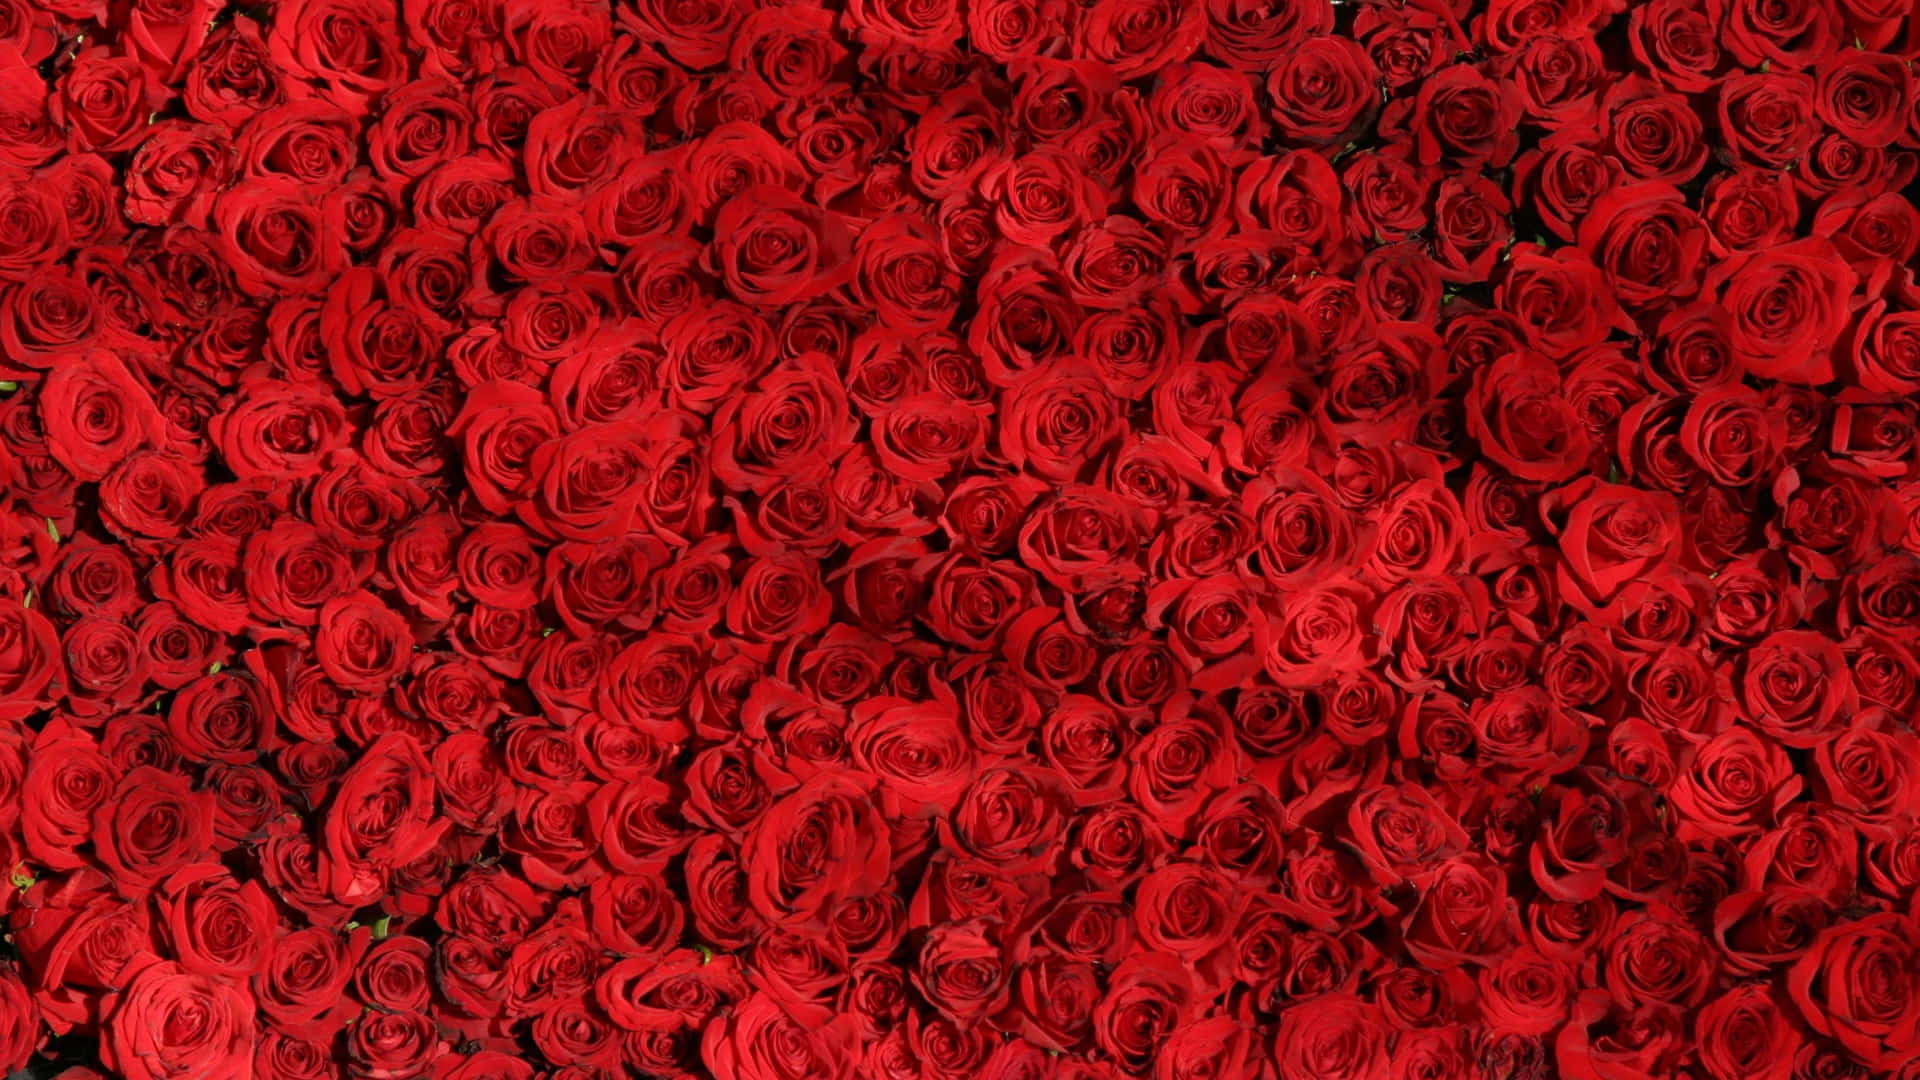 1440p Roses Baggrunde 2560 X 1440